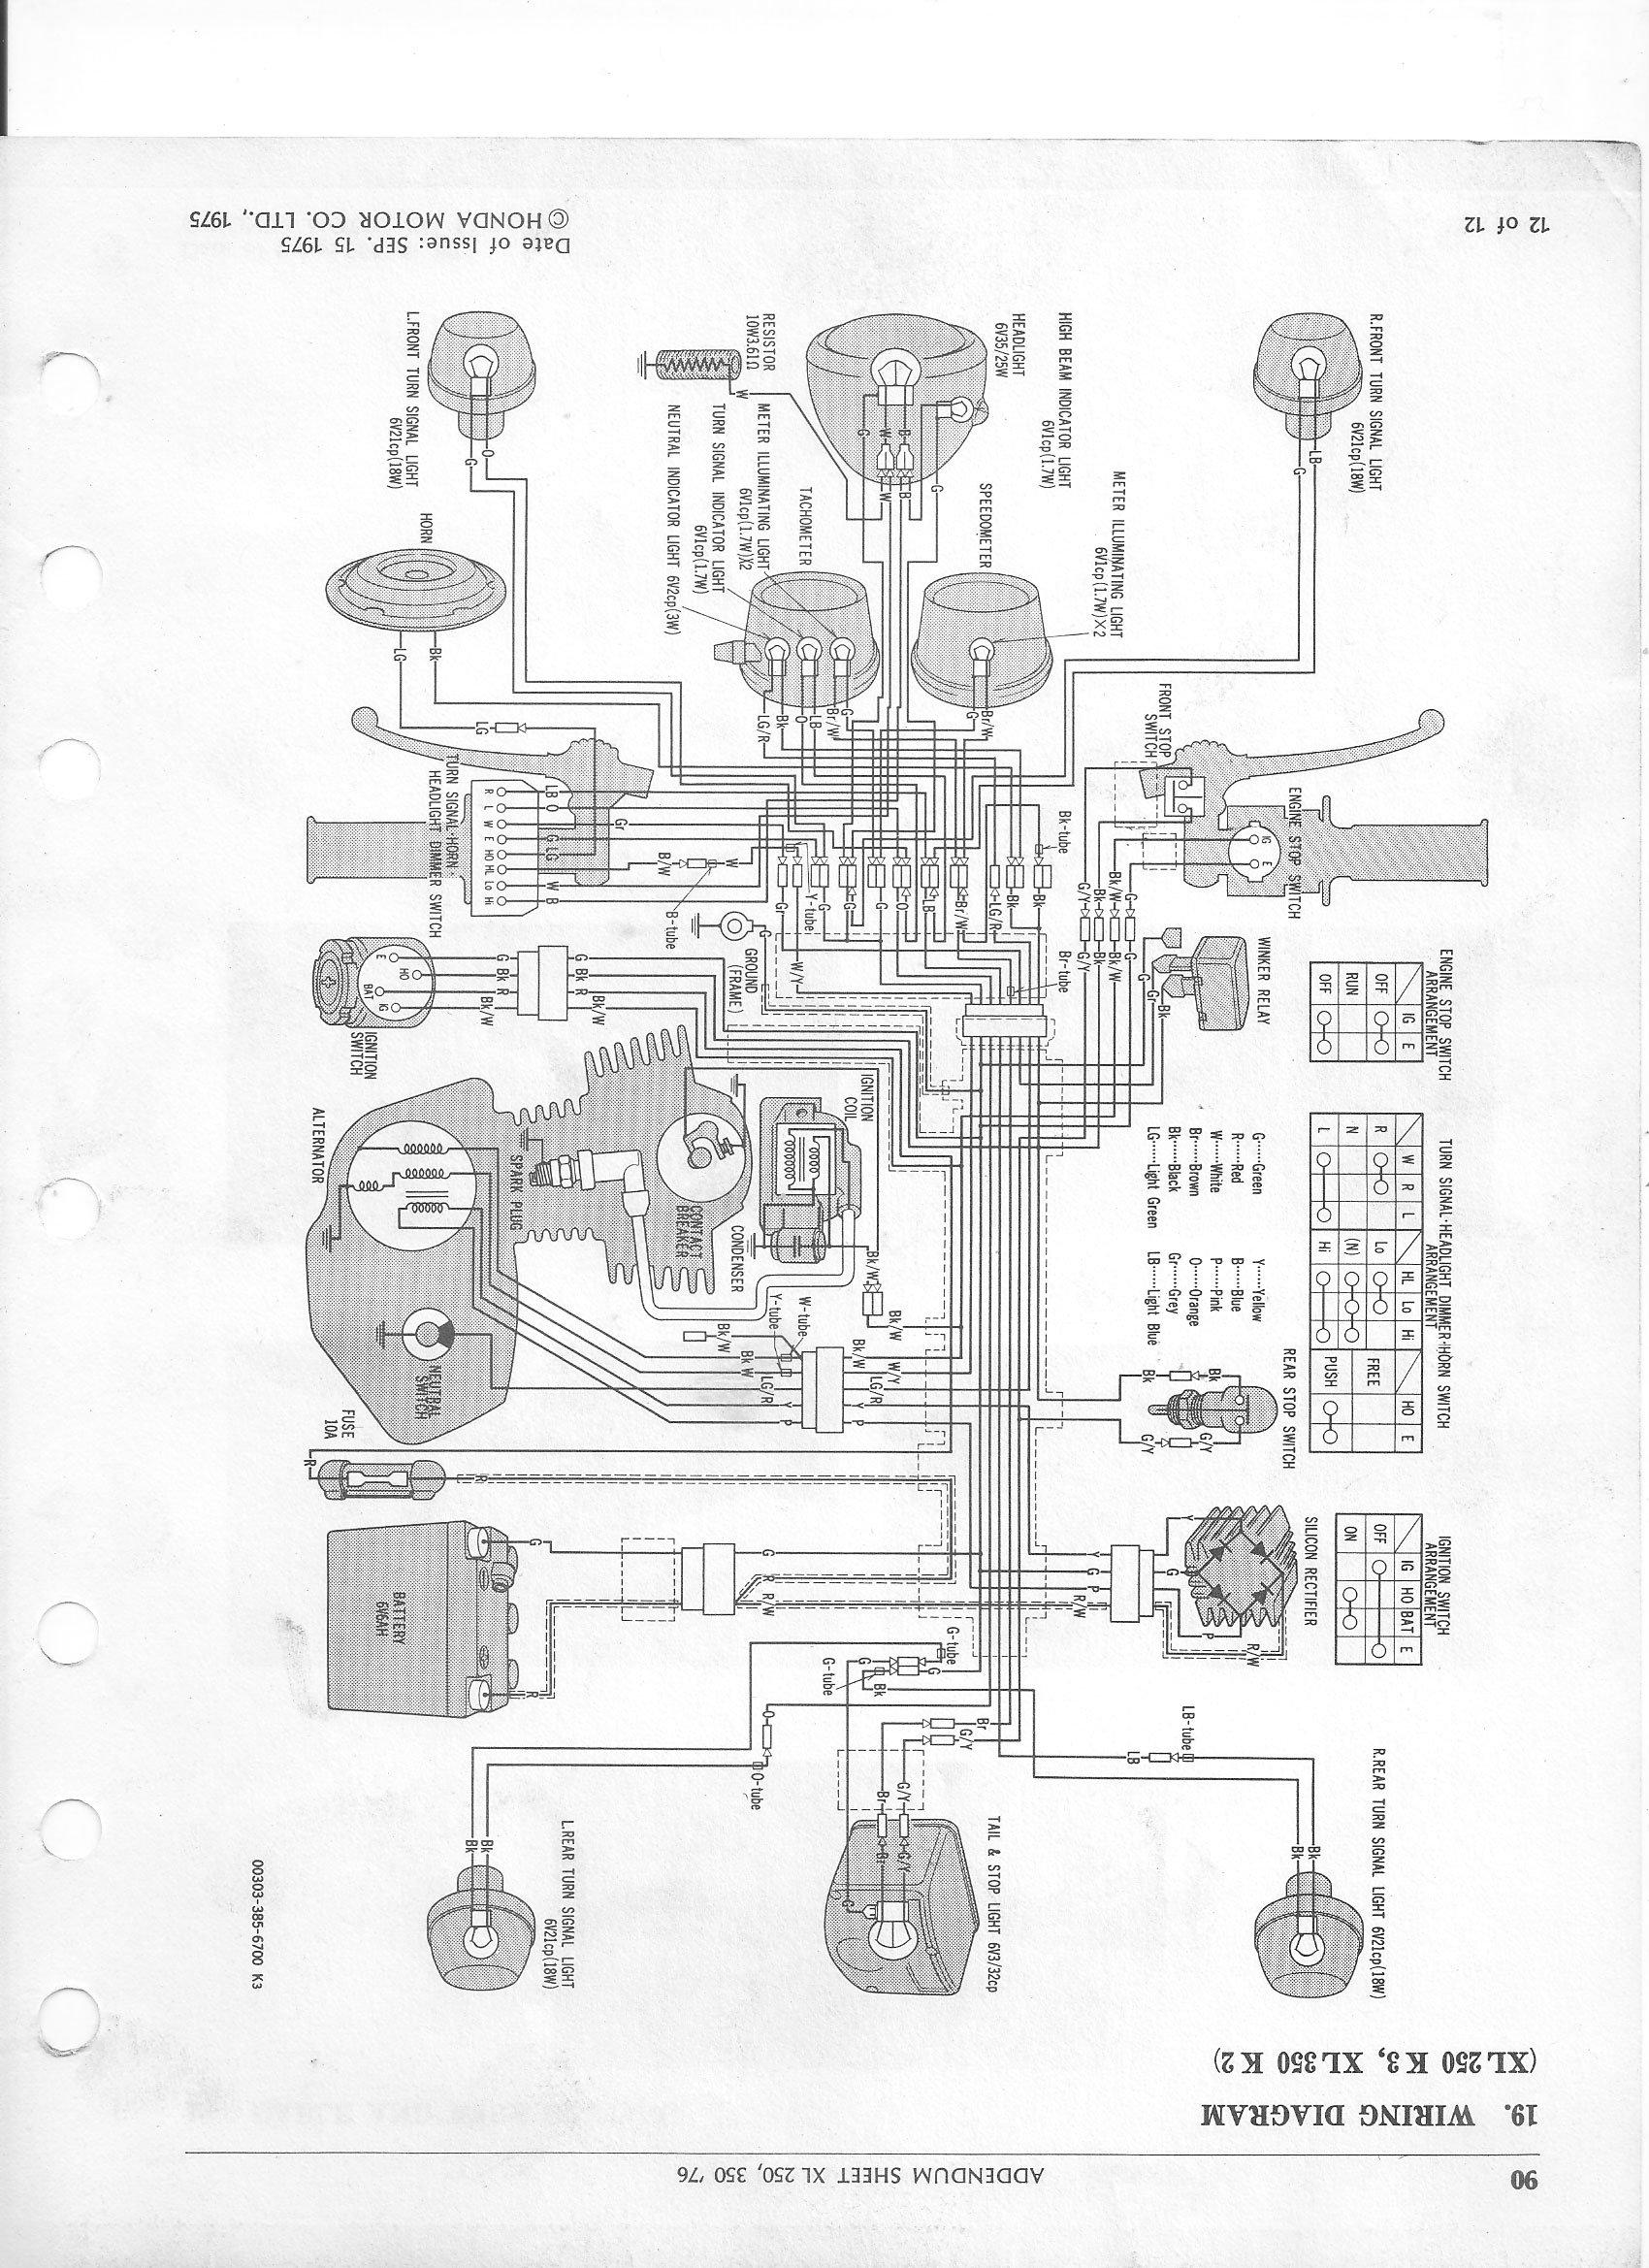 1974 cb360 wiring diagram